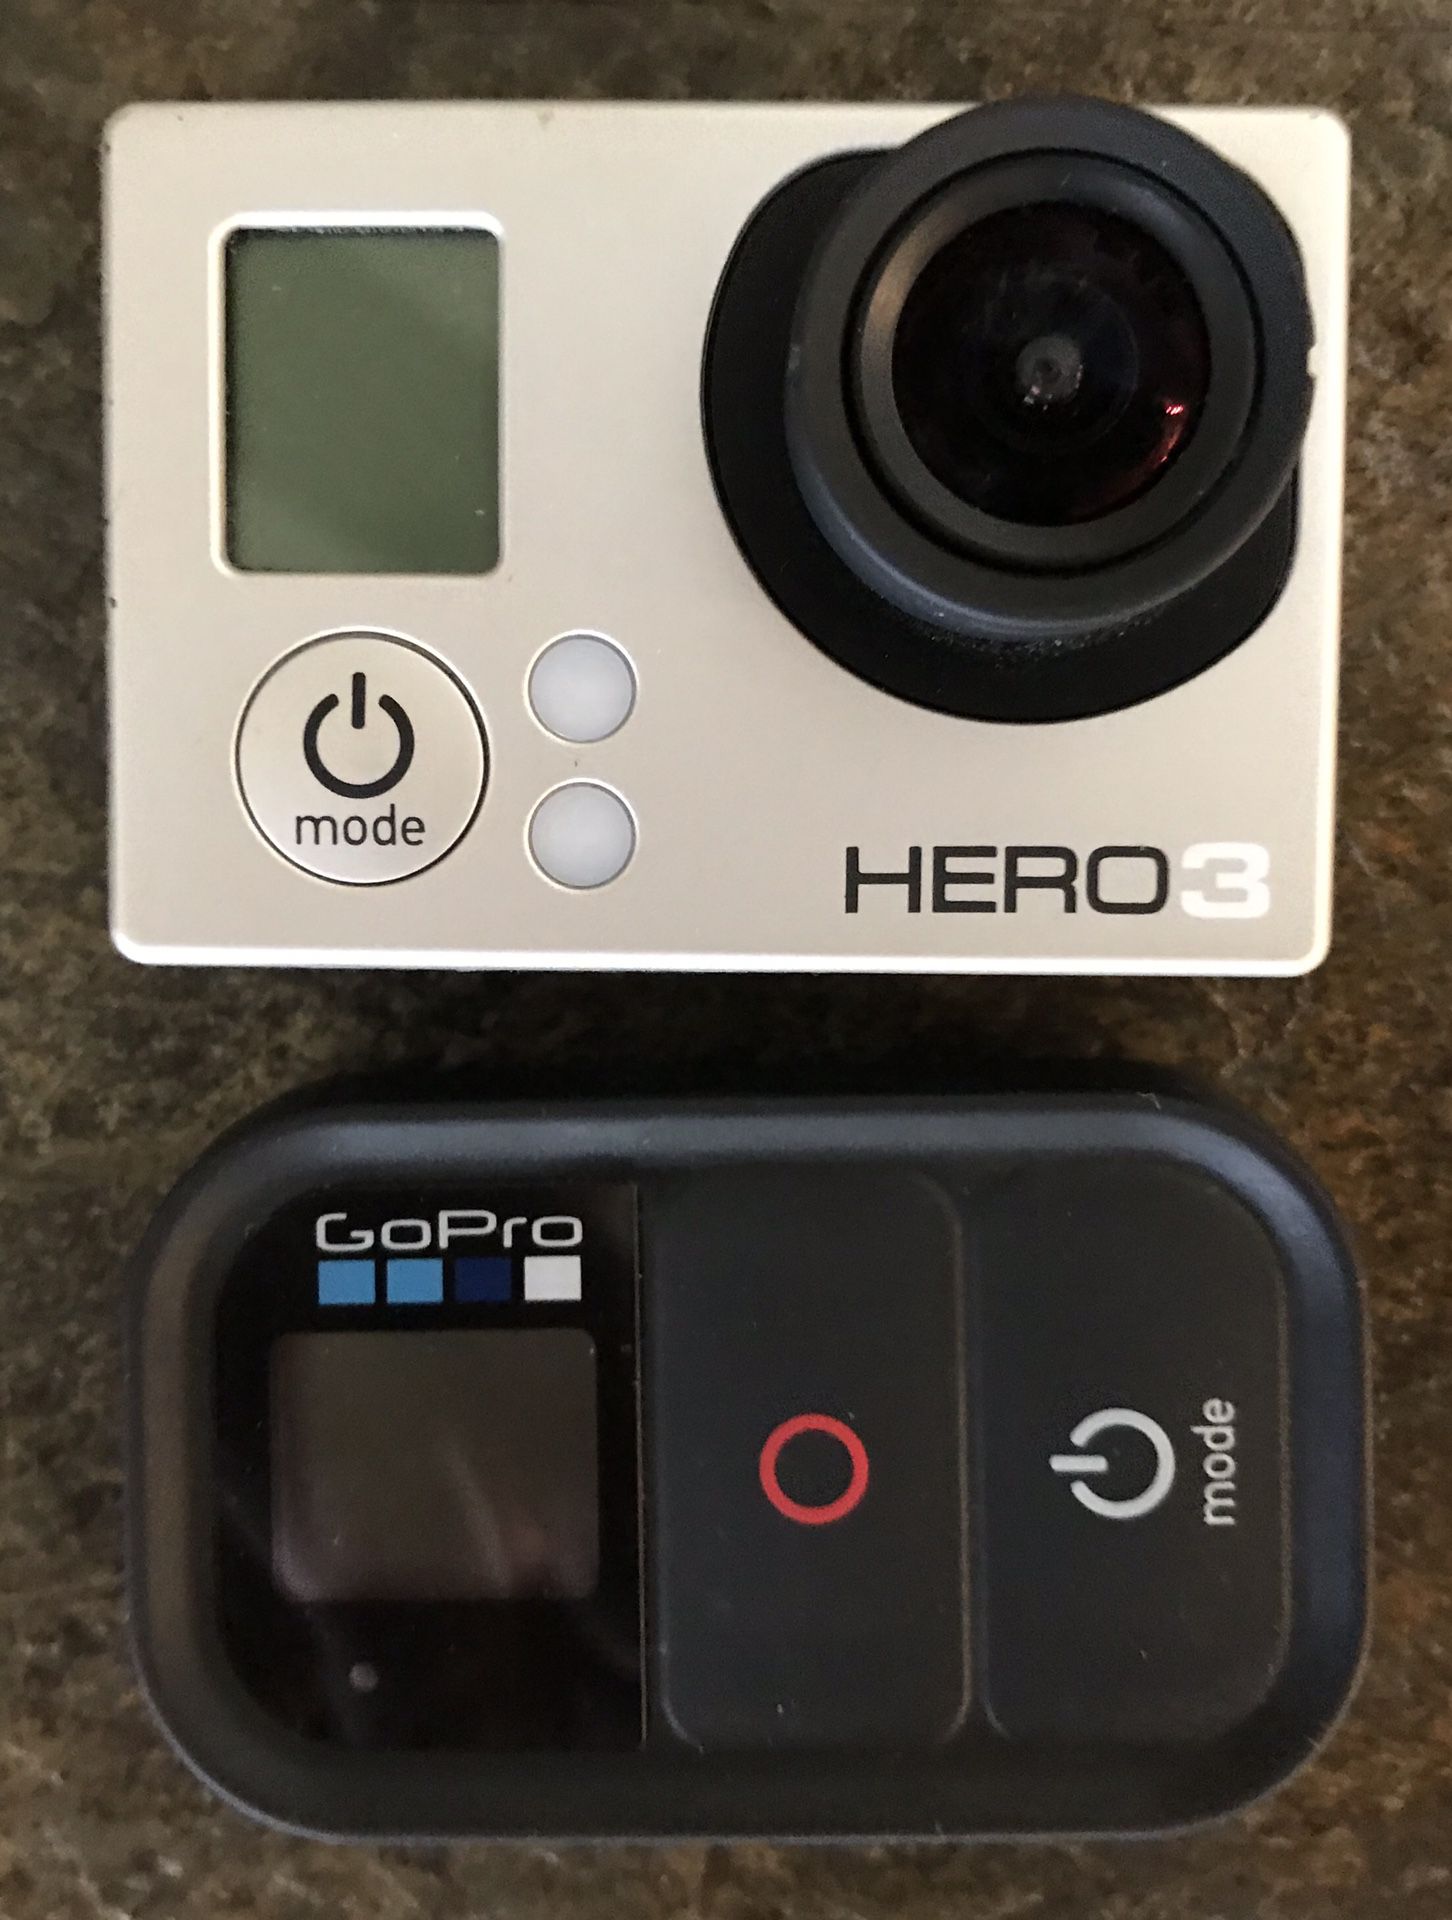 GoPro HERO3 5.0 MP Action Camera - 1080p